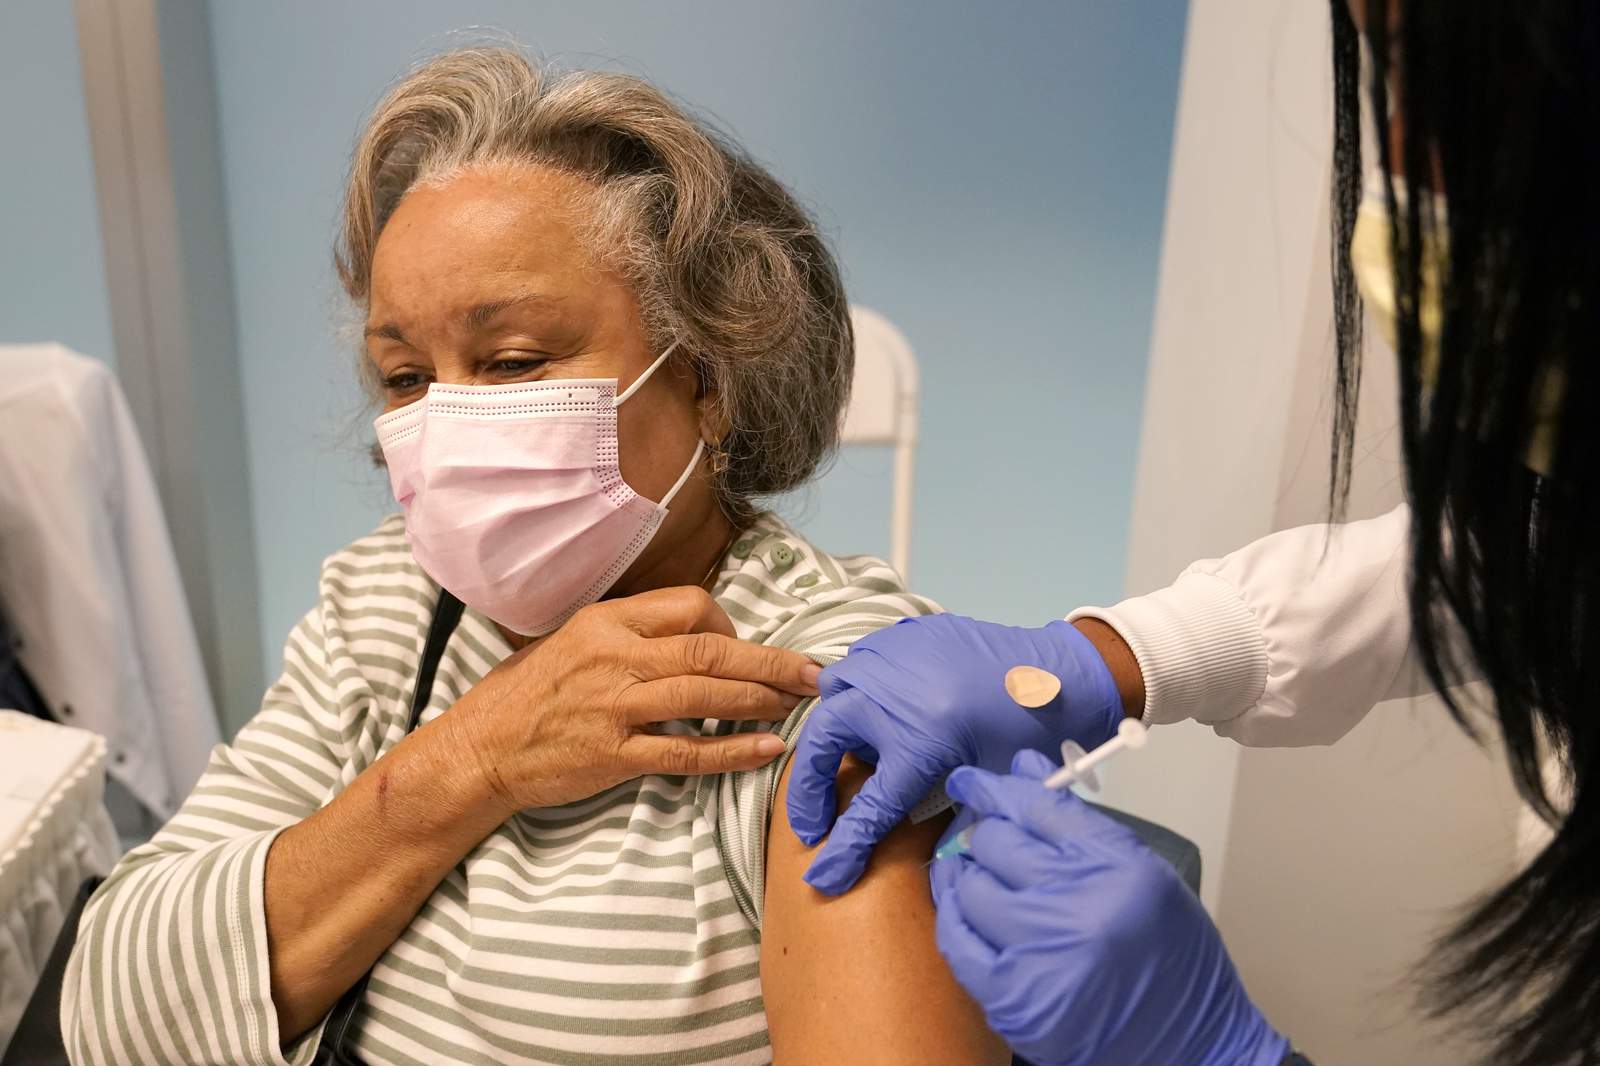 Vaccinating Florida's seniors at Miami's largest hospital